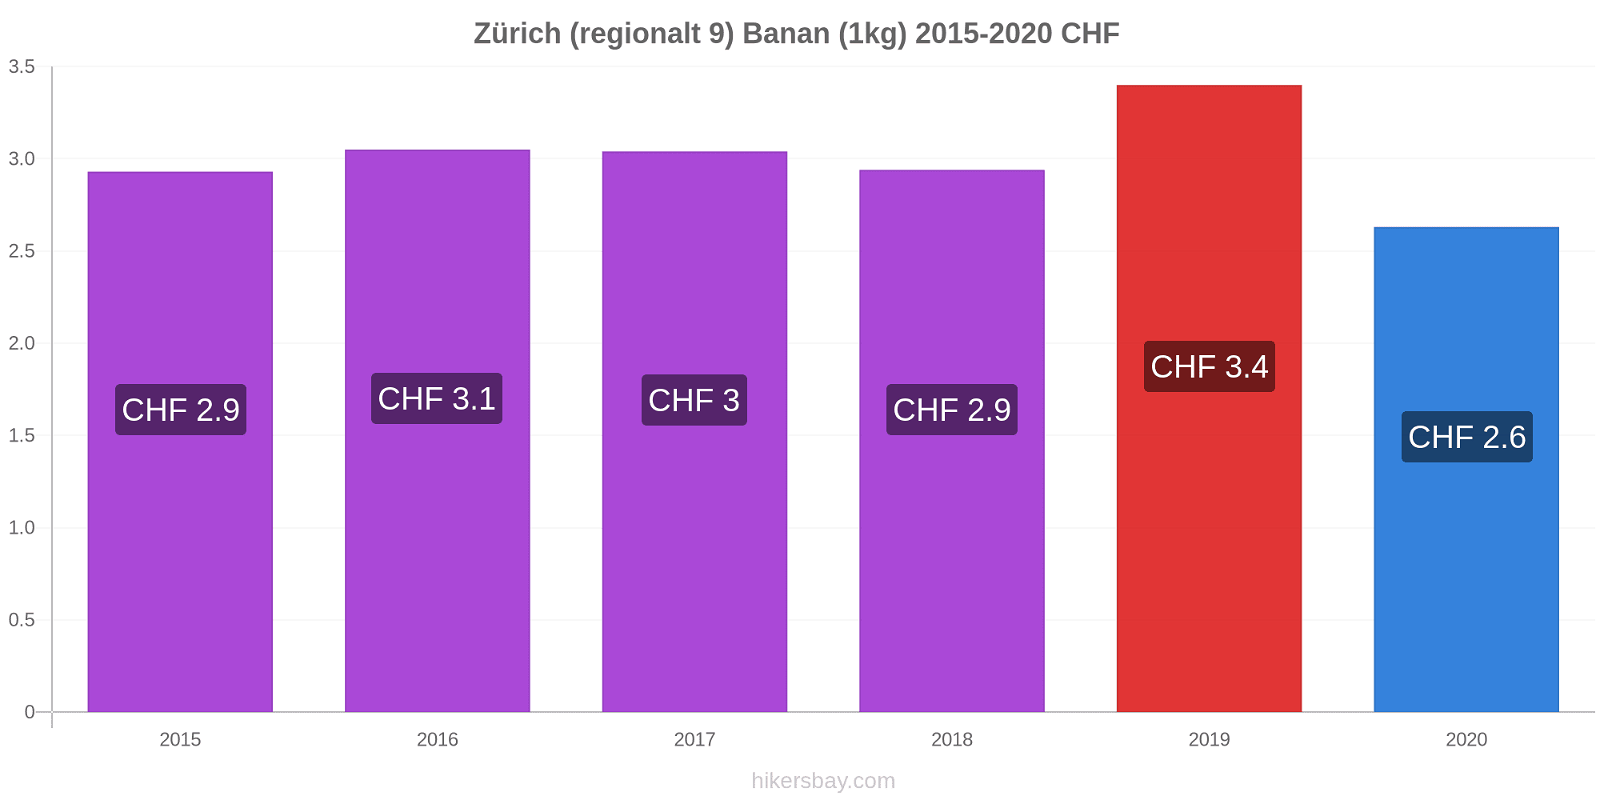 Zürich (regionalt 9) prisendringer Banan (1kg) hikersbay.com